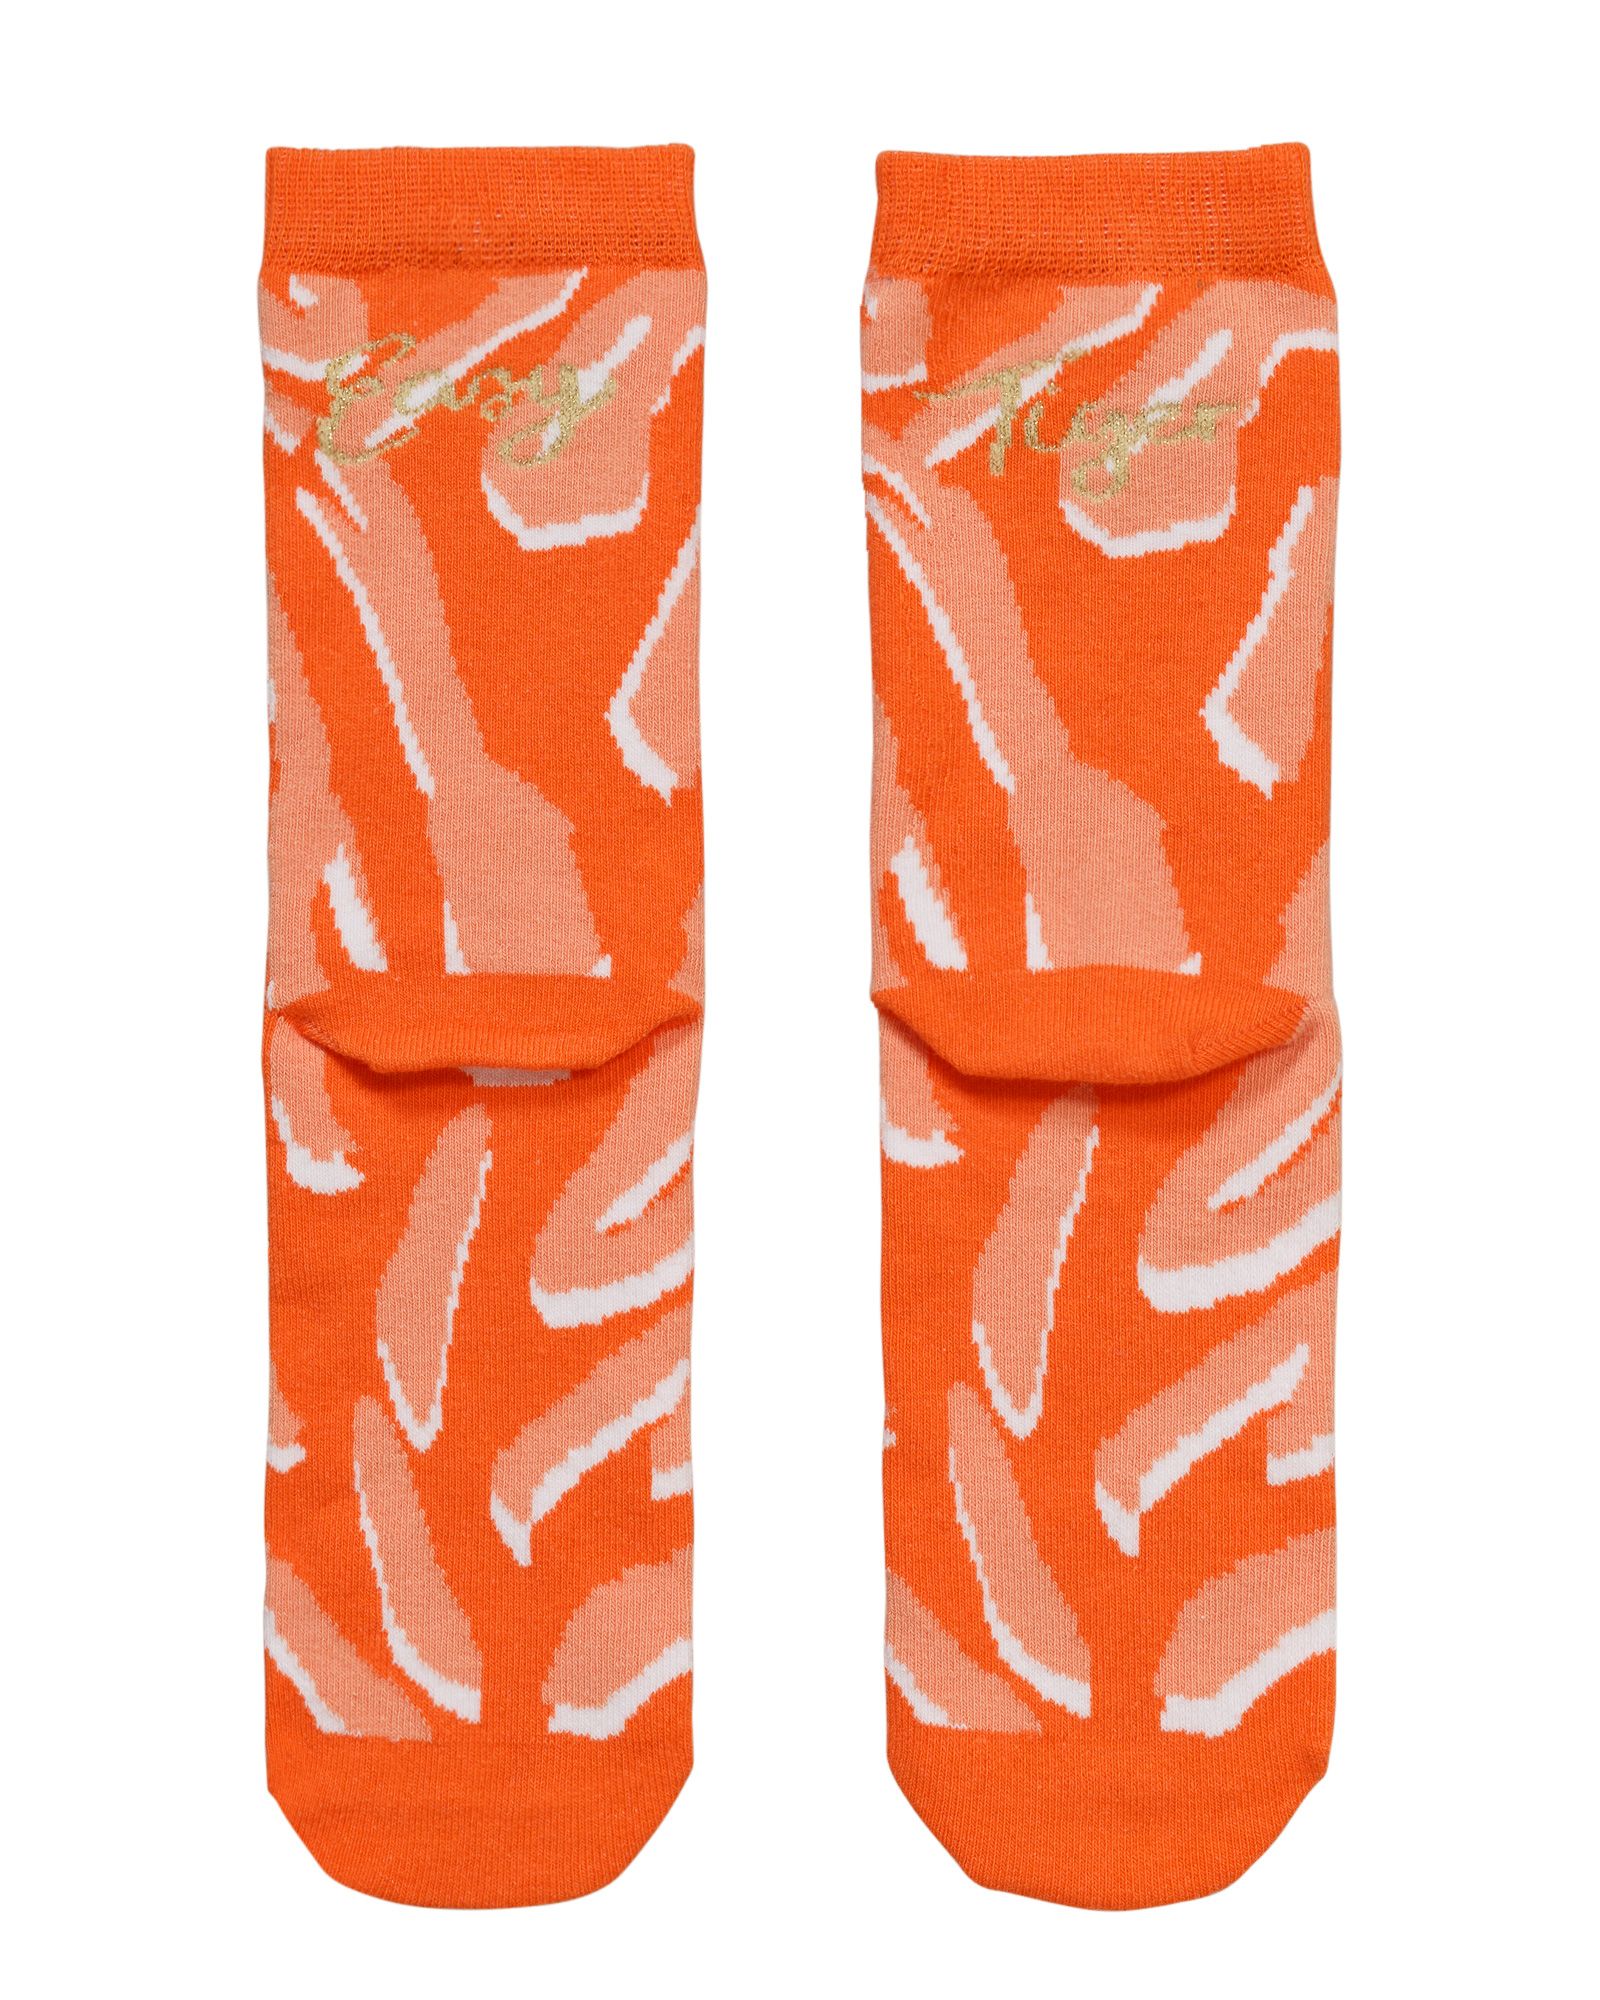 Easy Tiger Orange Socks | Oliver Bonas